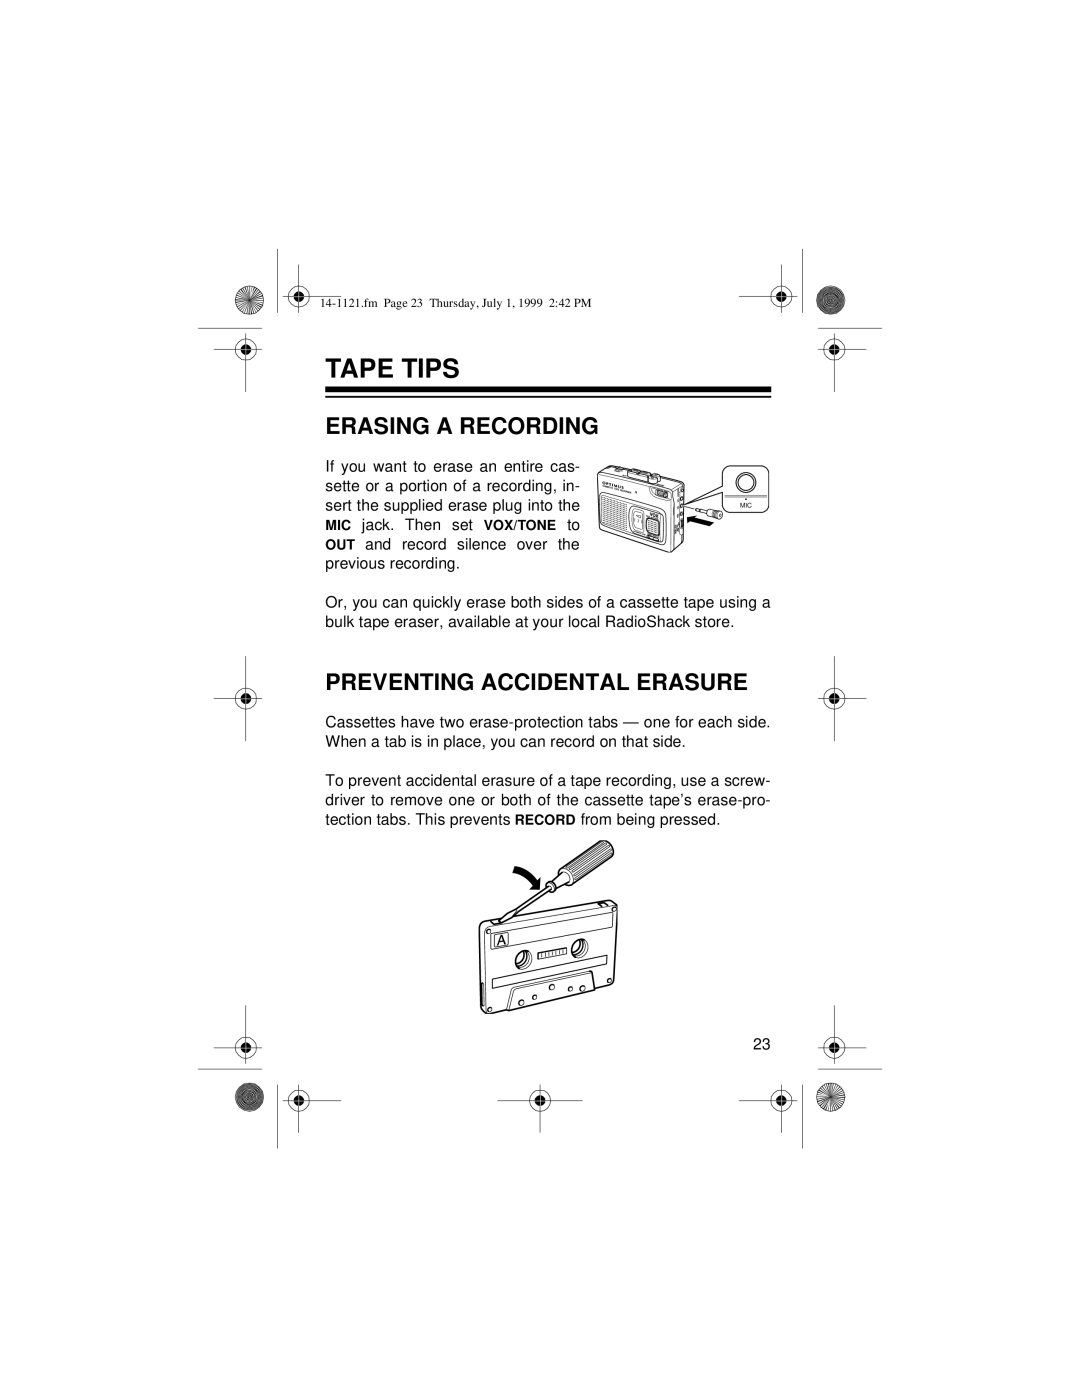 Optimus 2133-920-0-01, CTR-115, 14-1121 owner manual Tape Tips, Erasing A Recording, Preventing Accidental Erasure 